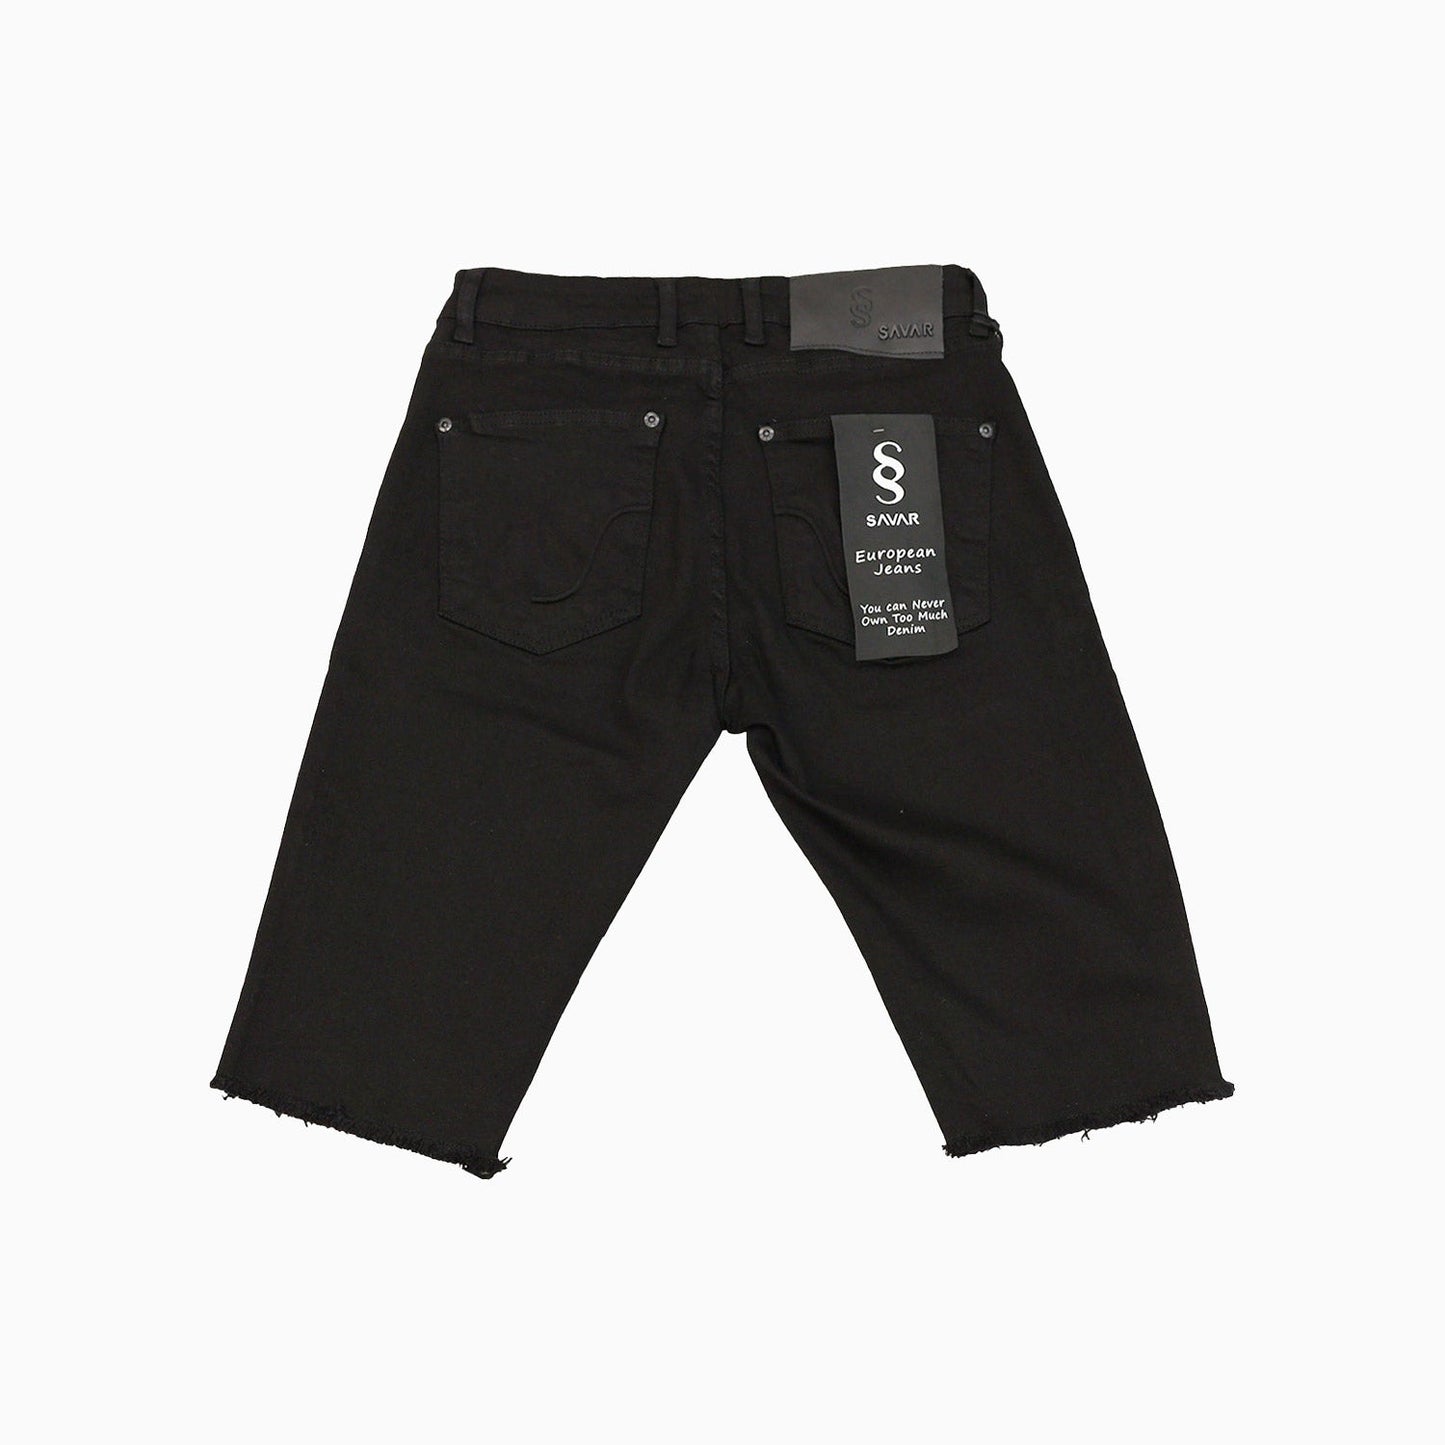 Men's Basic Jet Black Shorts